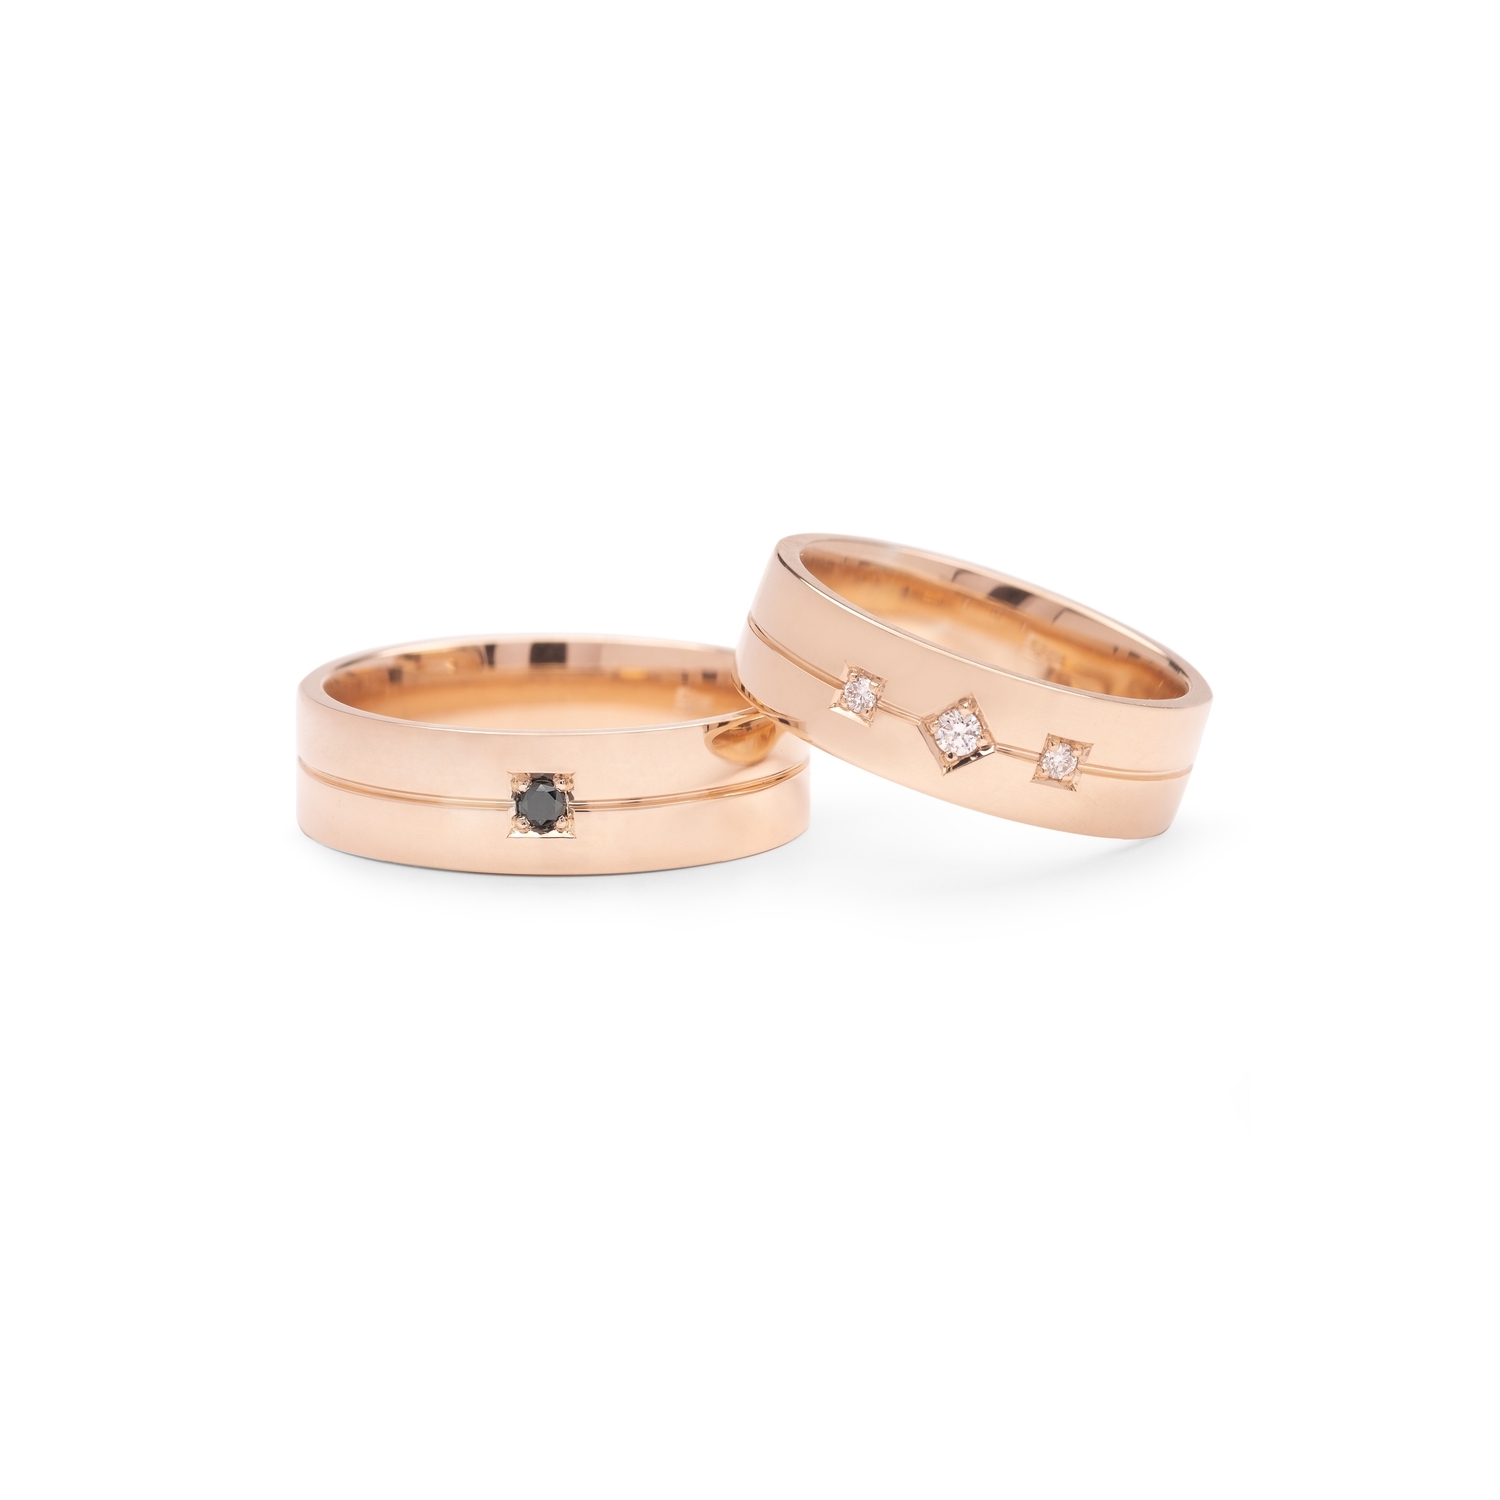 Golden wedding rings with diamonds "VMA 136-2"